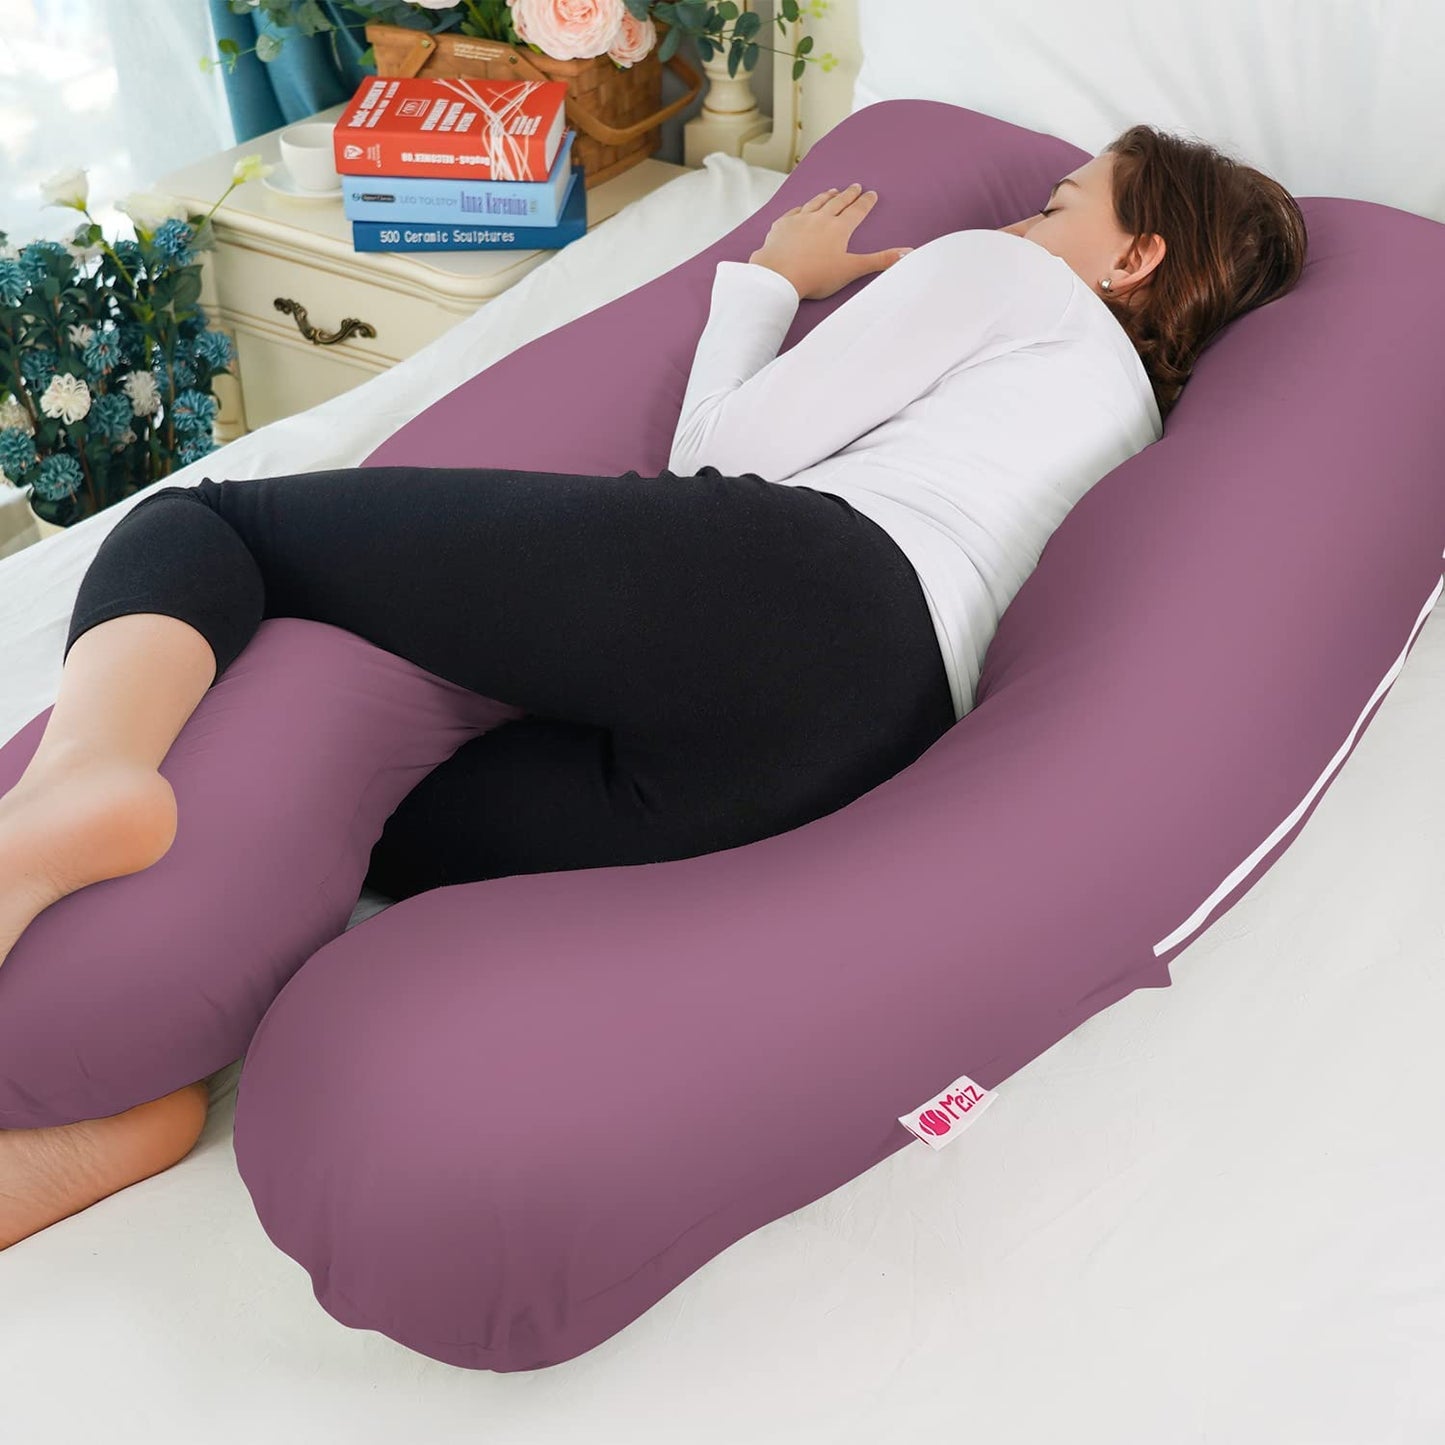 Pregnancy Support Pillow / Maternity Pillow / Sleeping Support Pillow Dark Purple